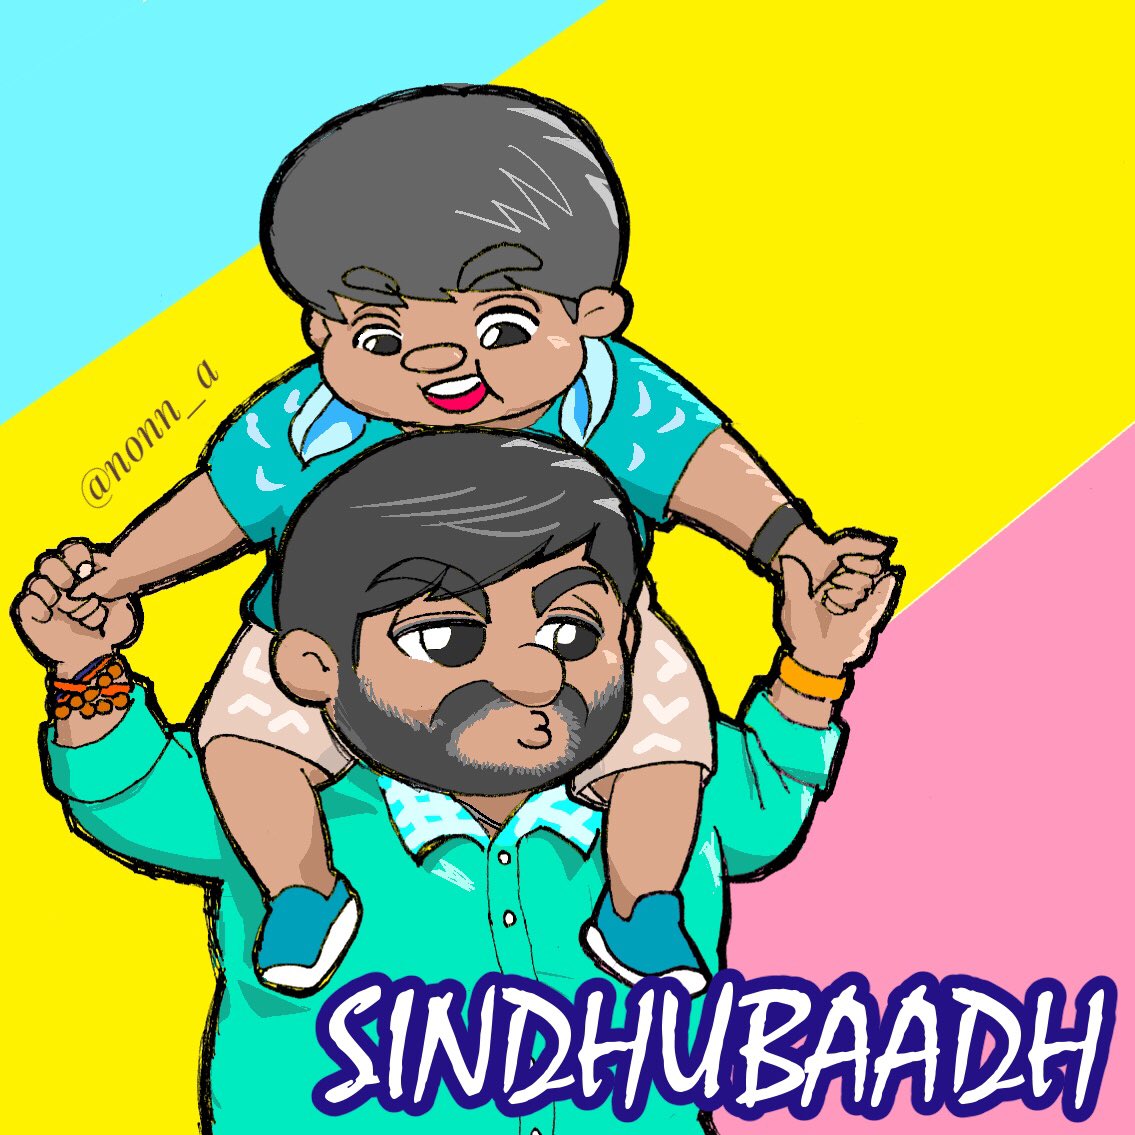 Vijay Sethupathi さんと 息子ちゃんが出演する #SindhuBaadh 、
めっちゃ楽しみ〜〜！！✨😆💕💕

#RockStarRobber  のダンスもすごい可愛い🕺🕺✨✨

#VijaySethupathi
#Makkalselvan